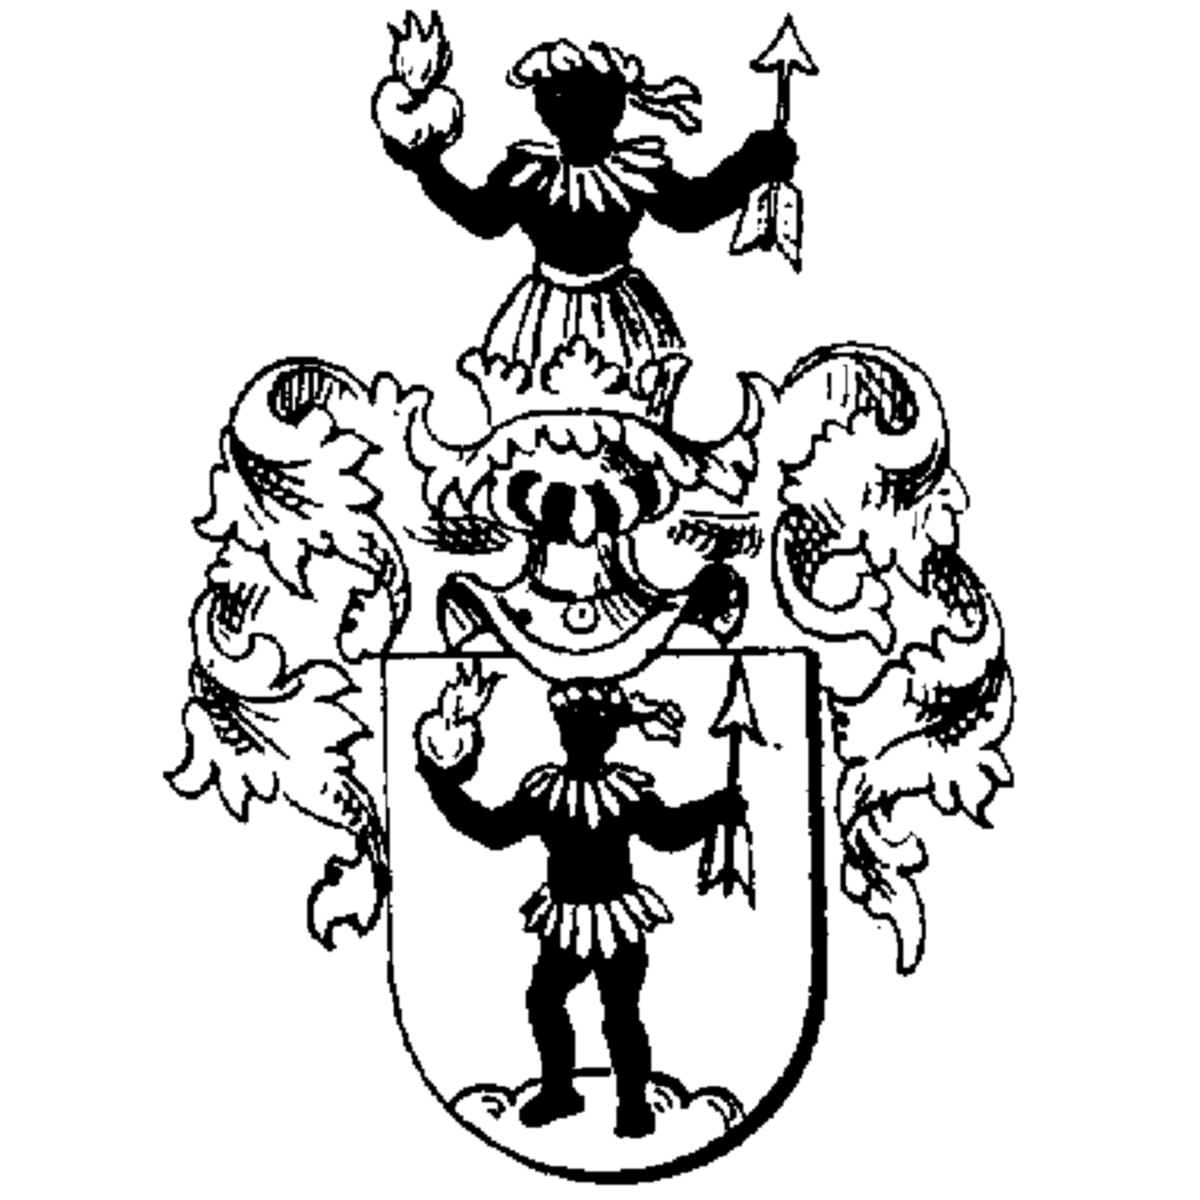 Wappen der Familie Zinkgraf